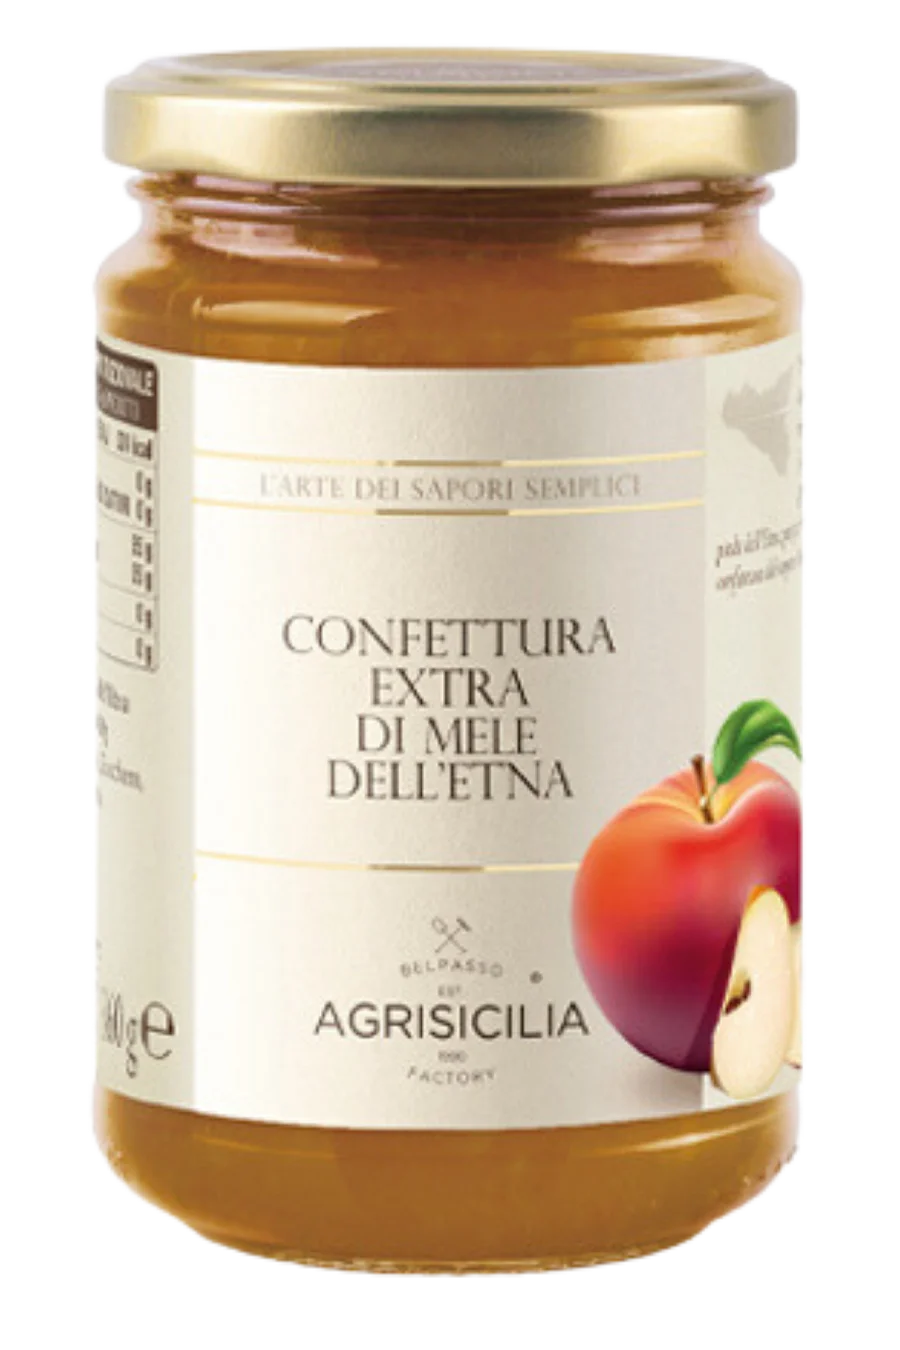 AGRISICILIA extra apple jam from Etna